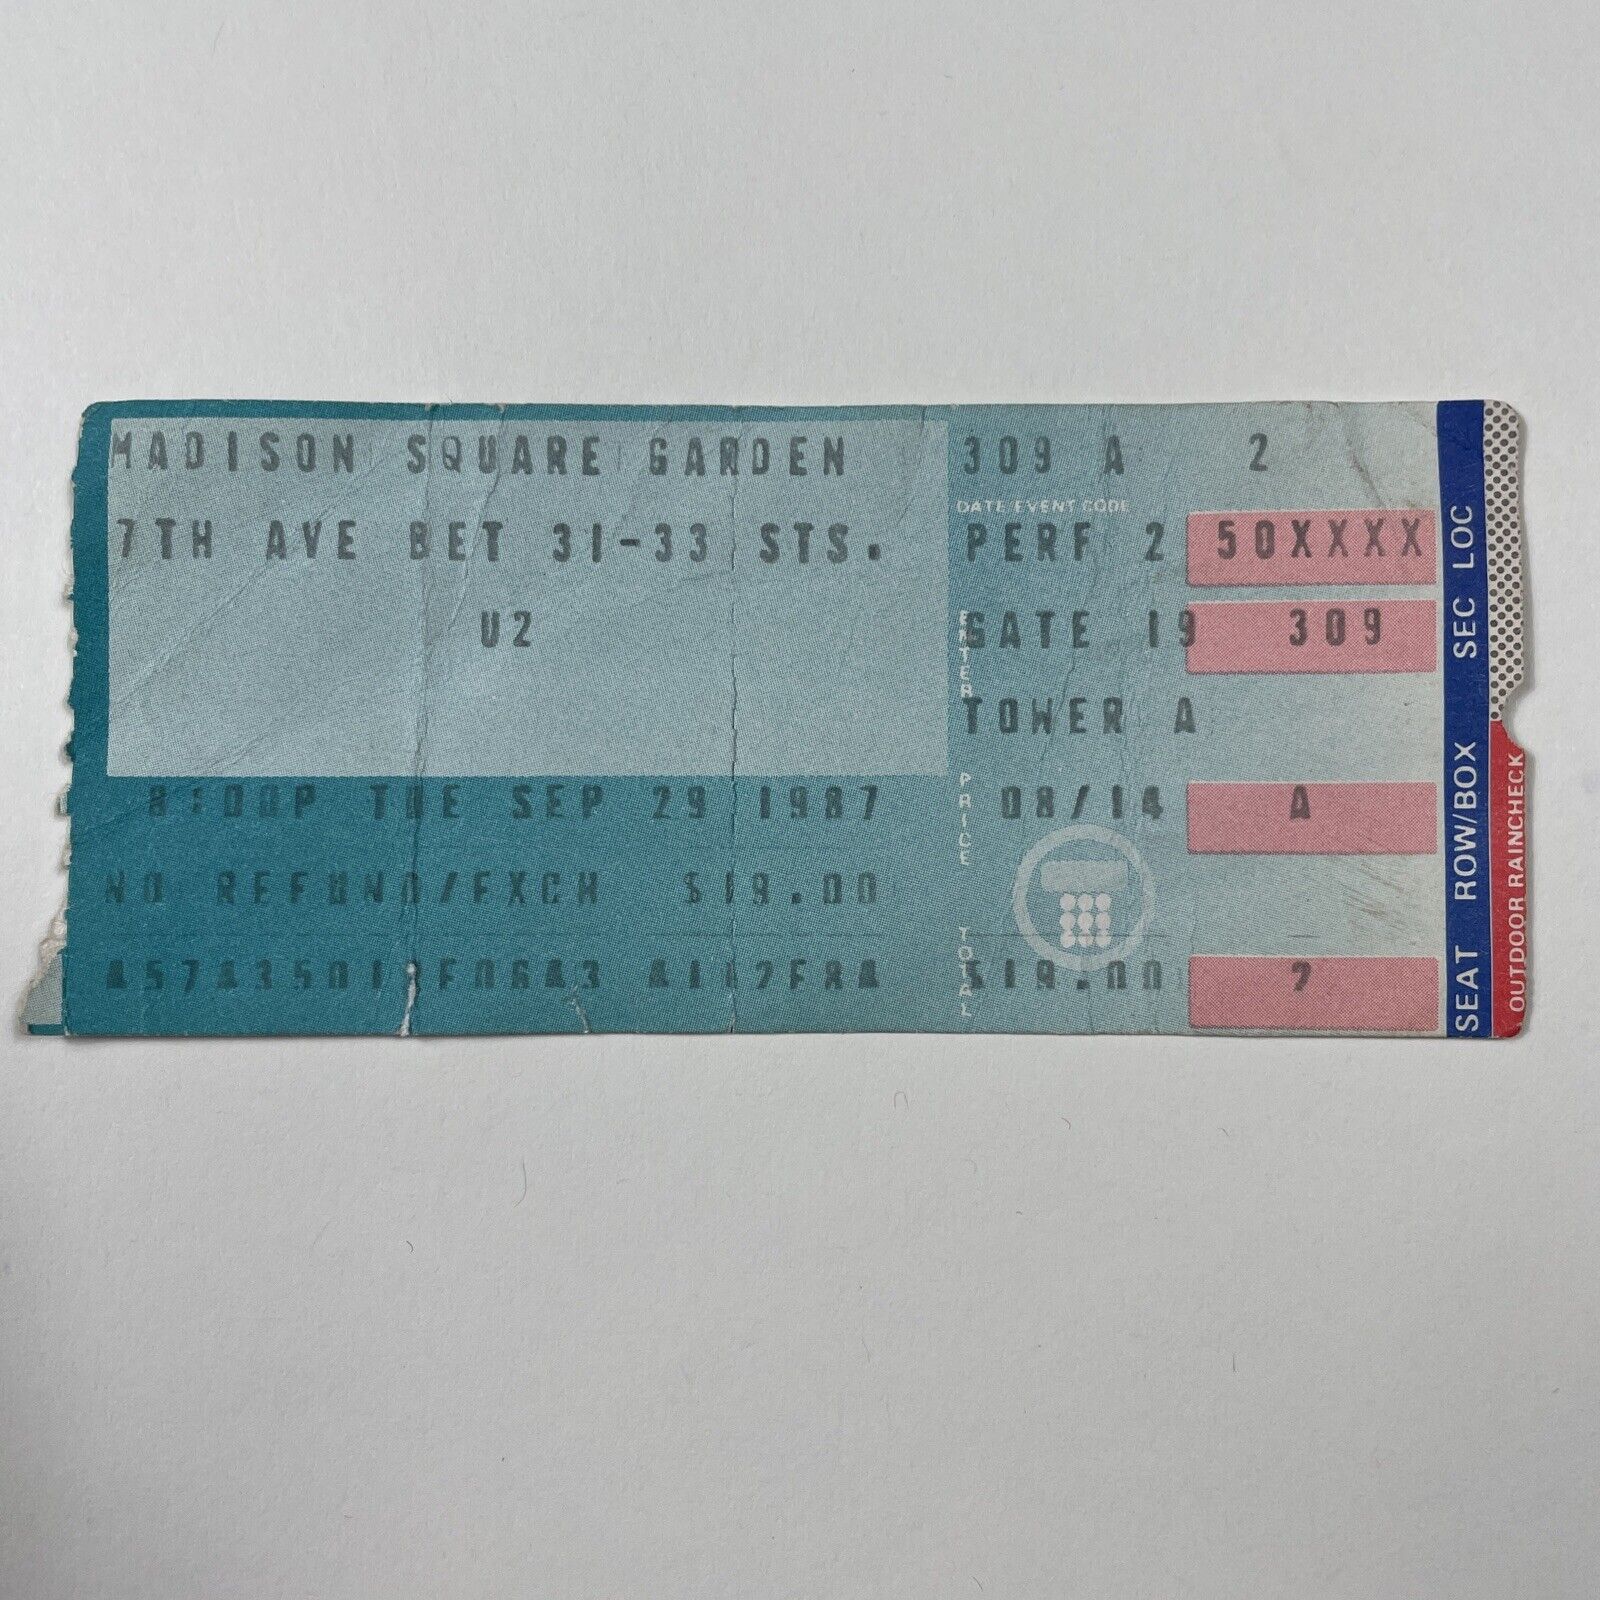 U2 1987 Joshua Tree Tour Concert Ticket Stub Sep 29 1987 Madison Square Garden